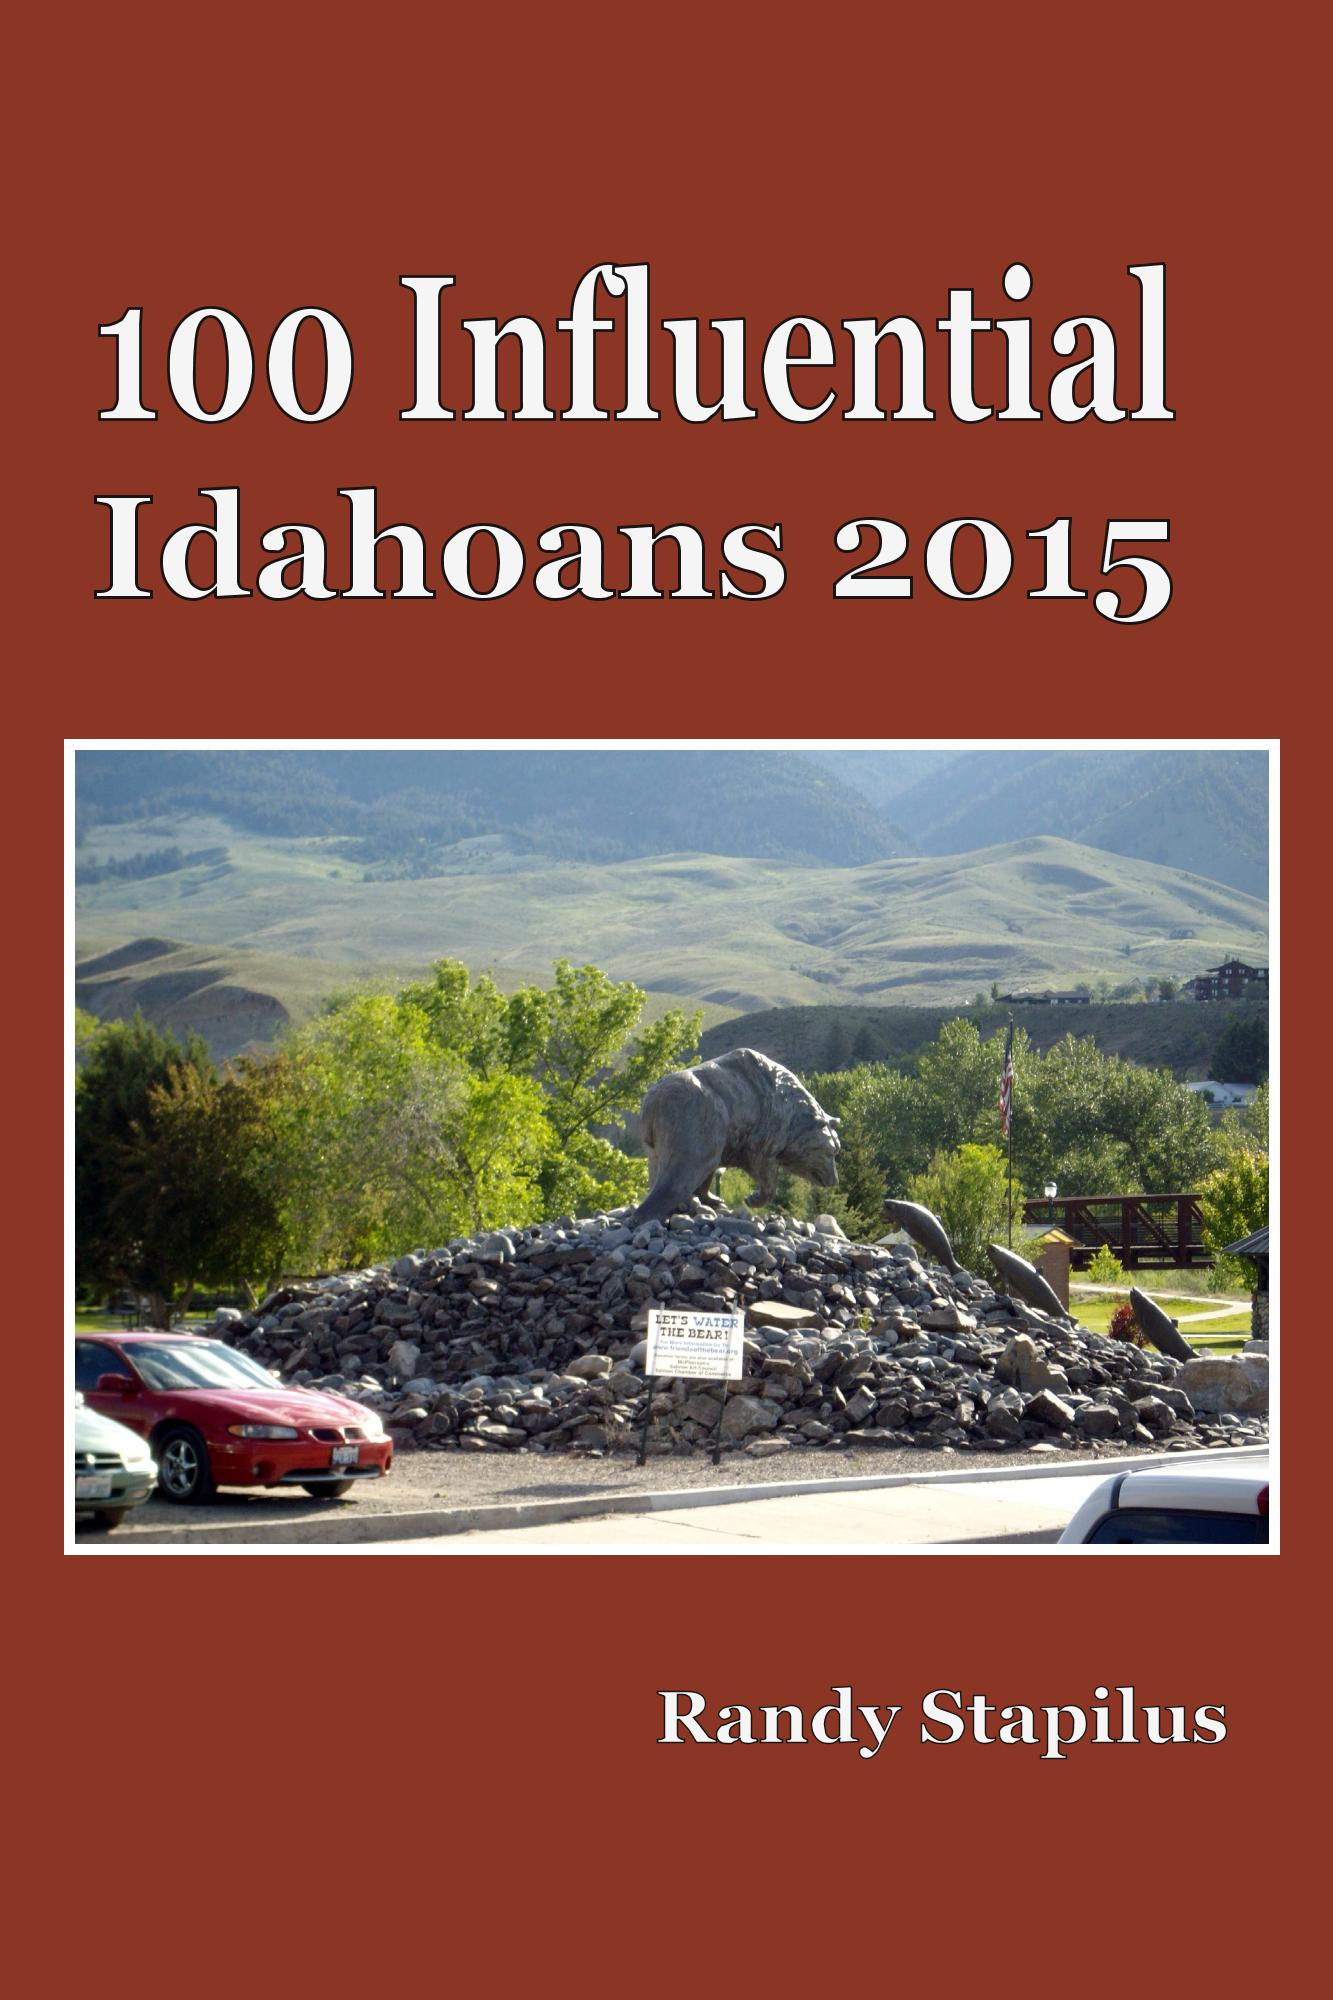 http://ridenbaughpress.com/randystapilus/ridenbaugh-books/100-influential-idahoans-2015/